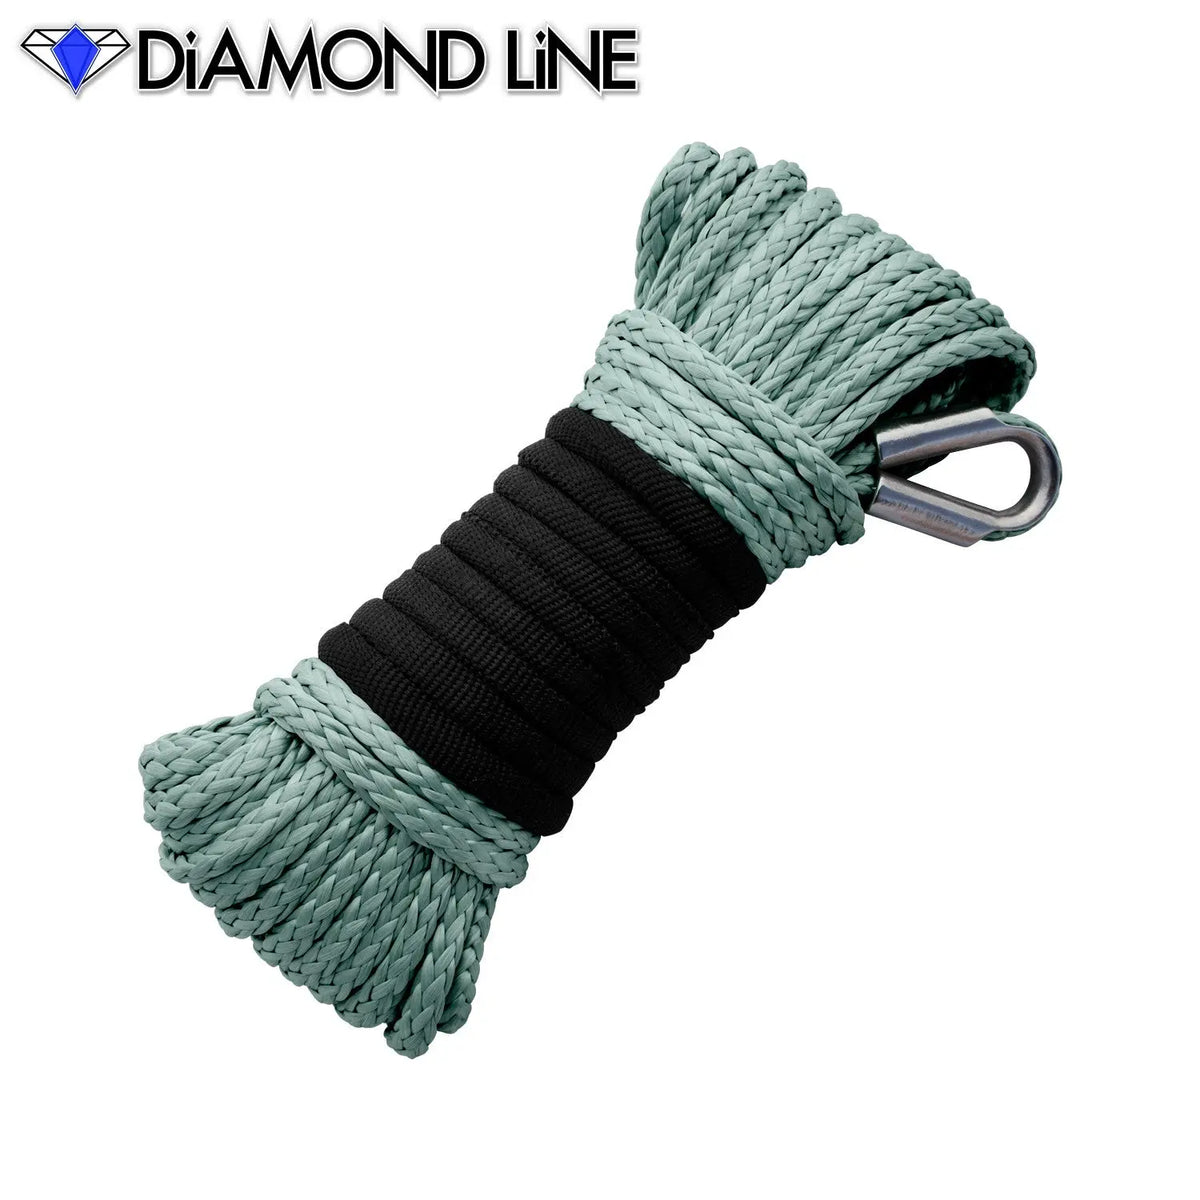 3/16" x 50' Diamond Line Winch Rope Mainline - Dark Pewter.